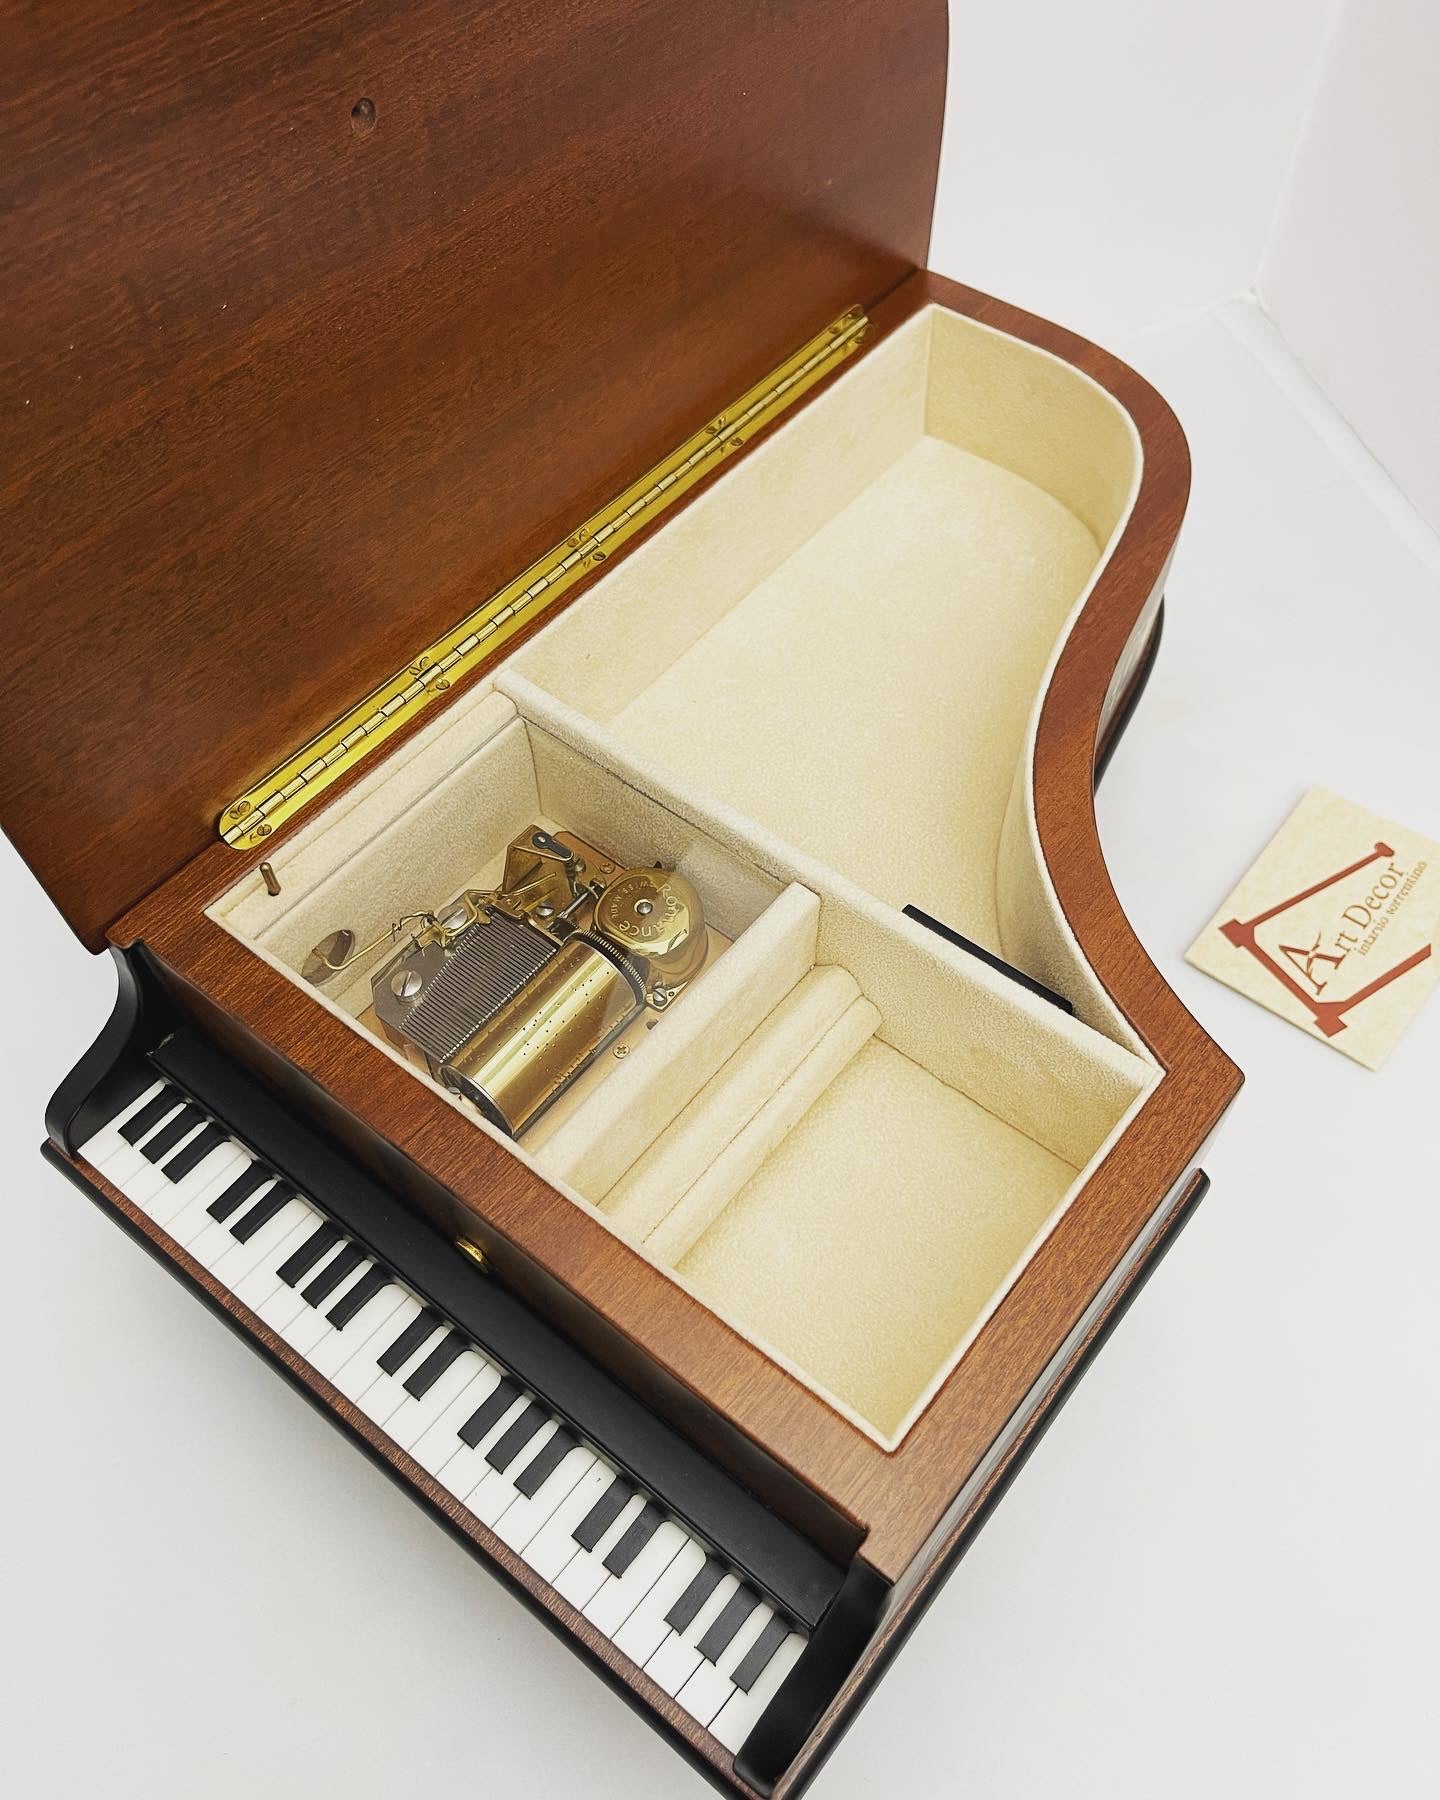 Inlaid Sorrento Italy Piano Shaped Music Box  -Tune:  "Its a Wonderful World"